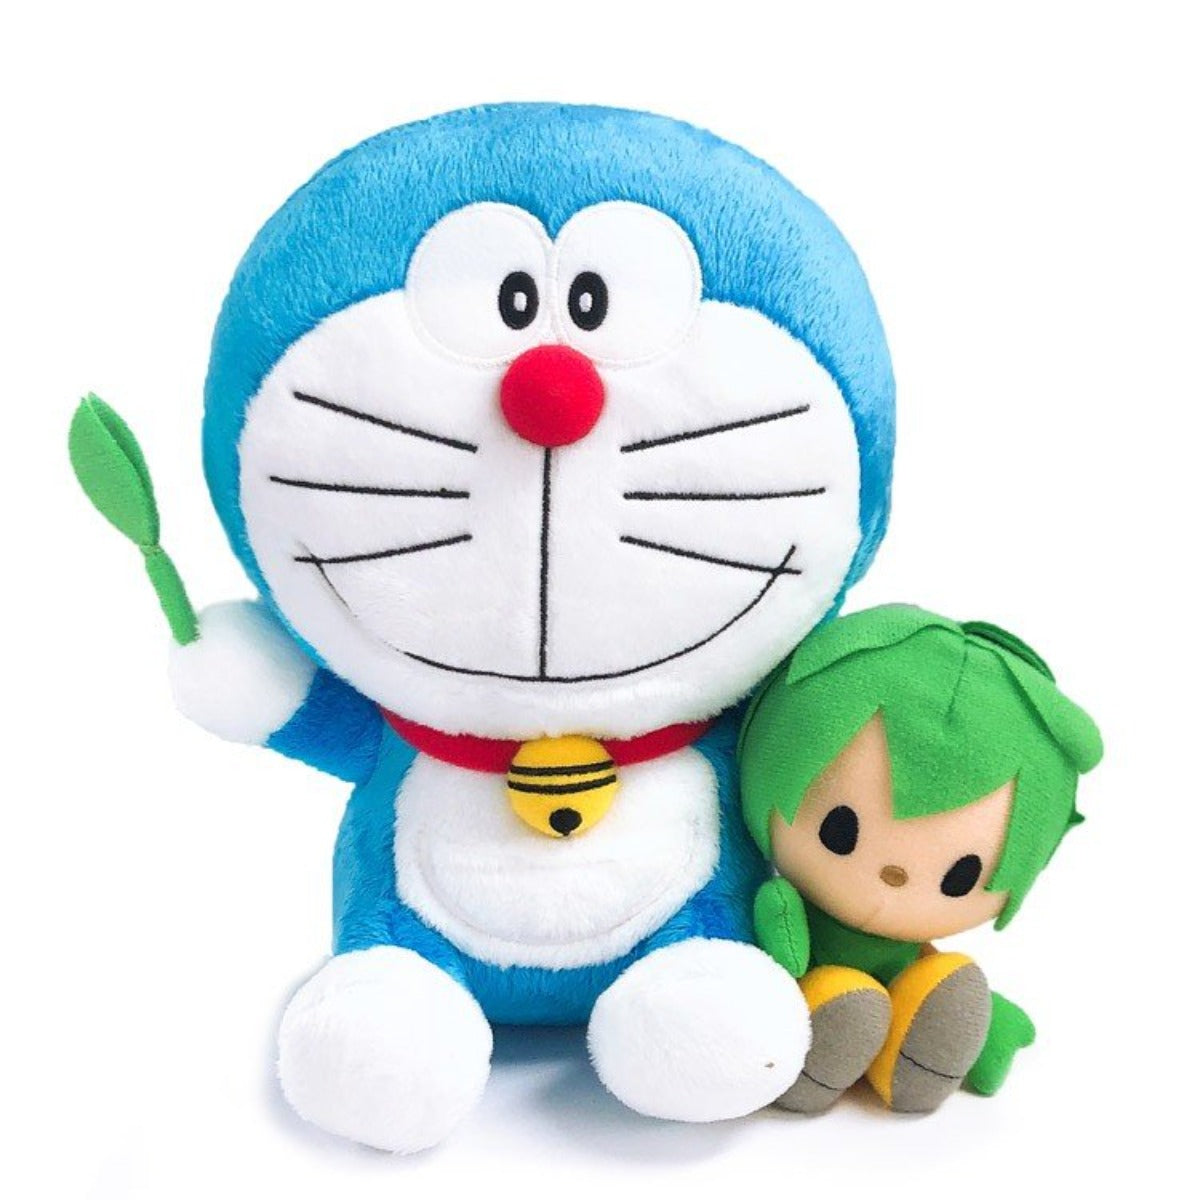 Doraemon Plush Green Boy (Japan Edition)